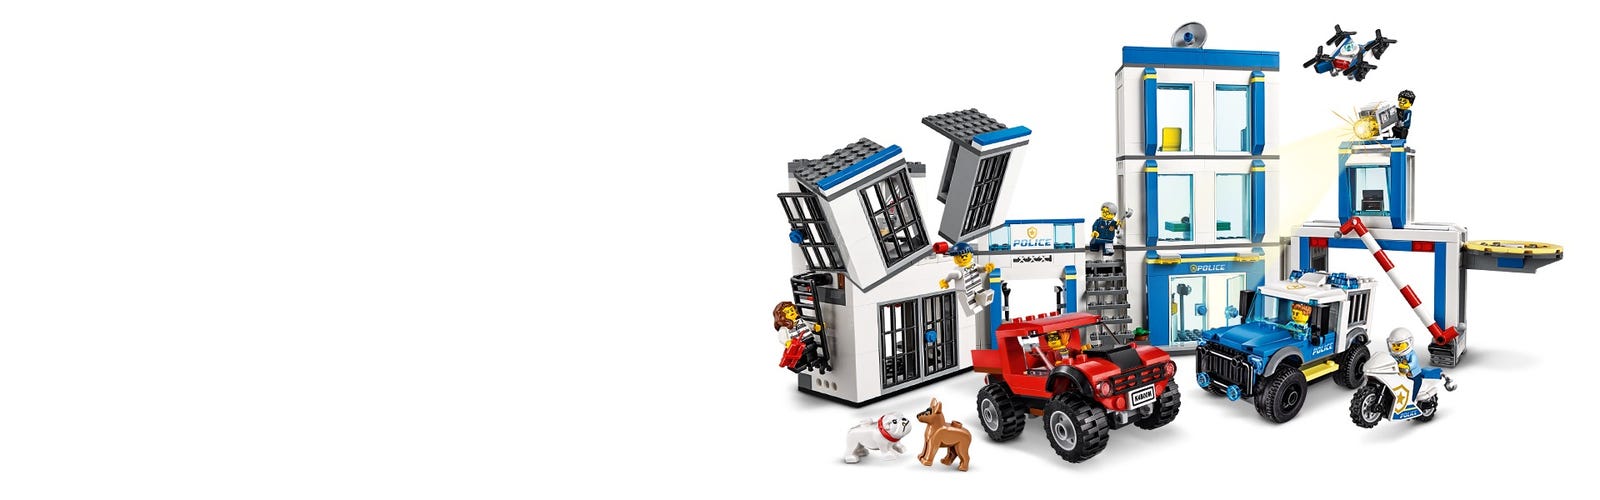 LEGO CITY: Police Station (60246) for sale online